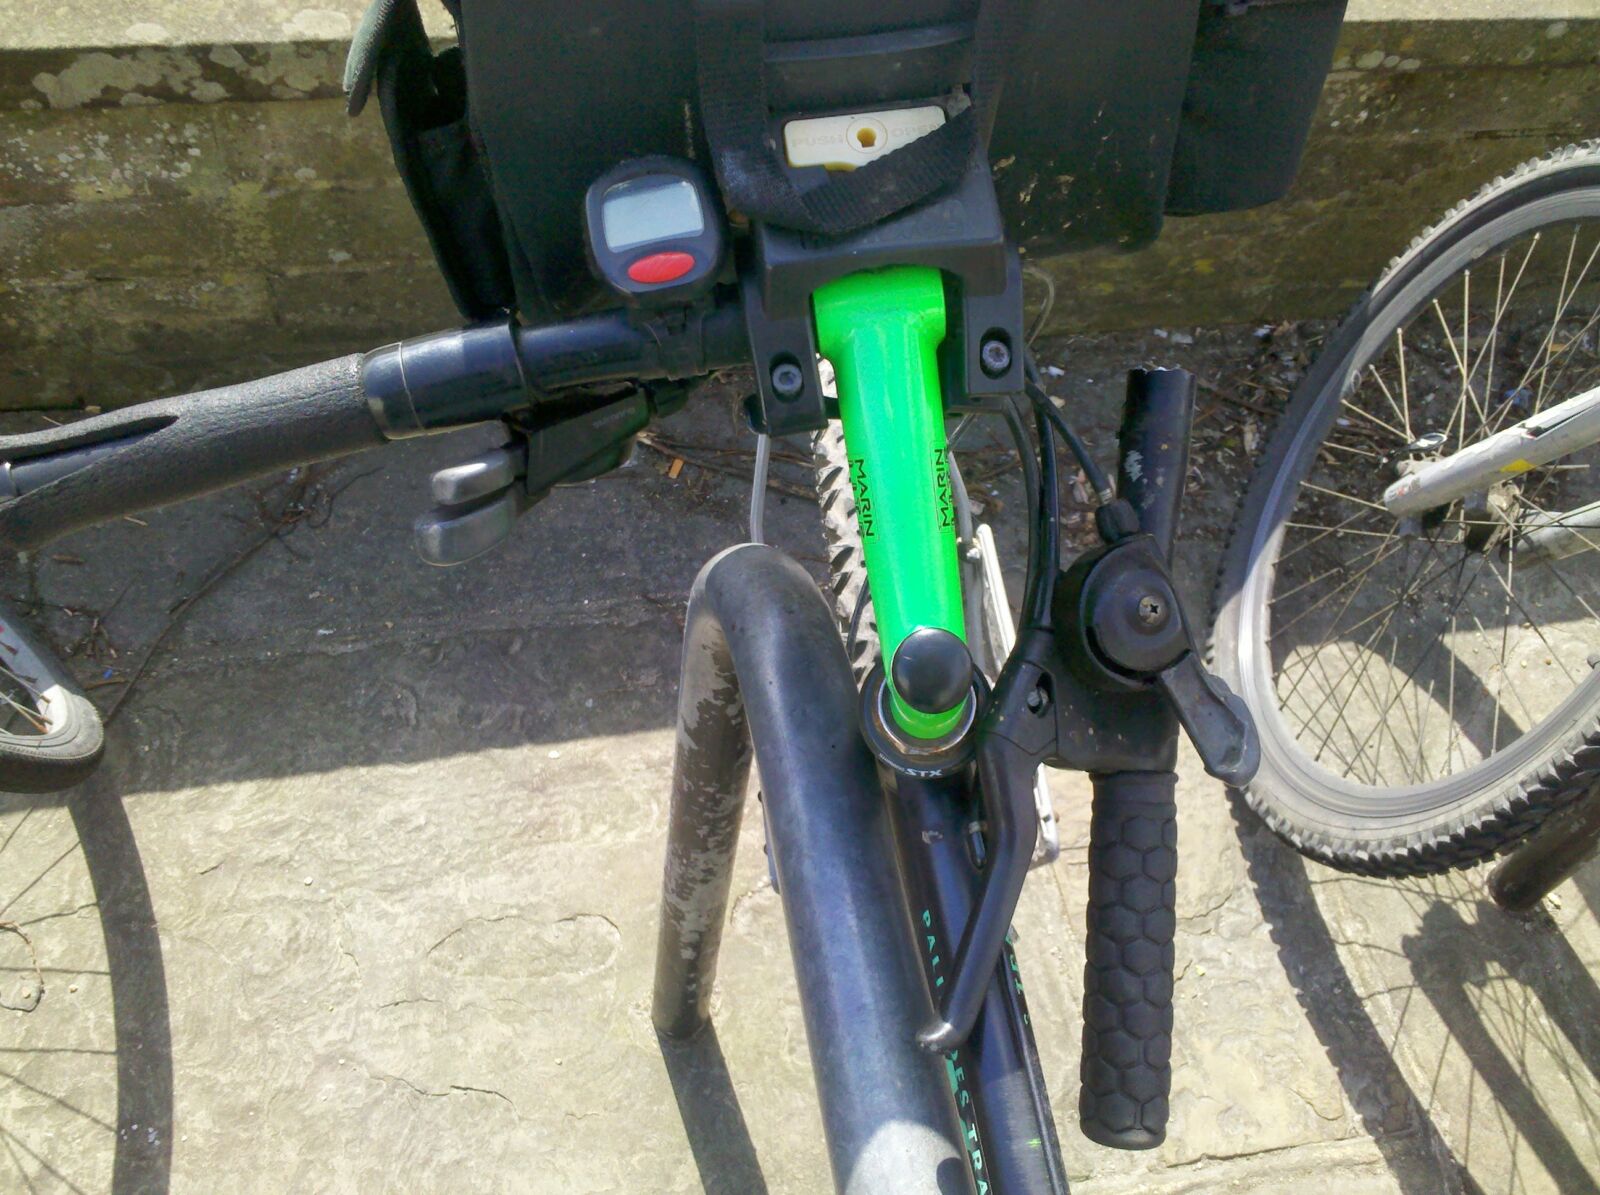 Broken bicycle handlebars